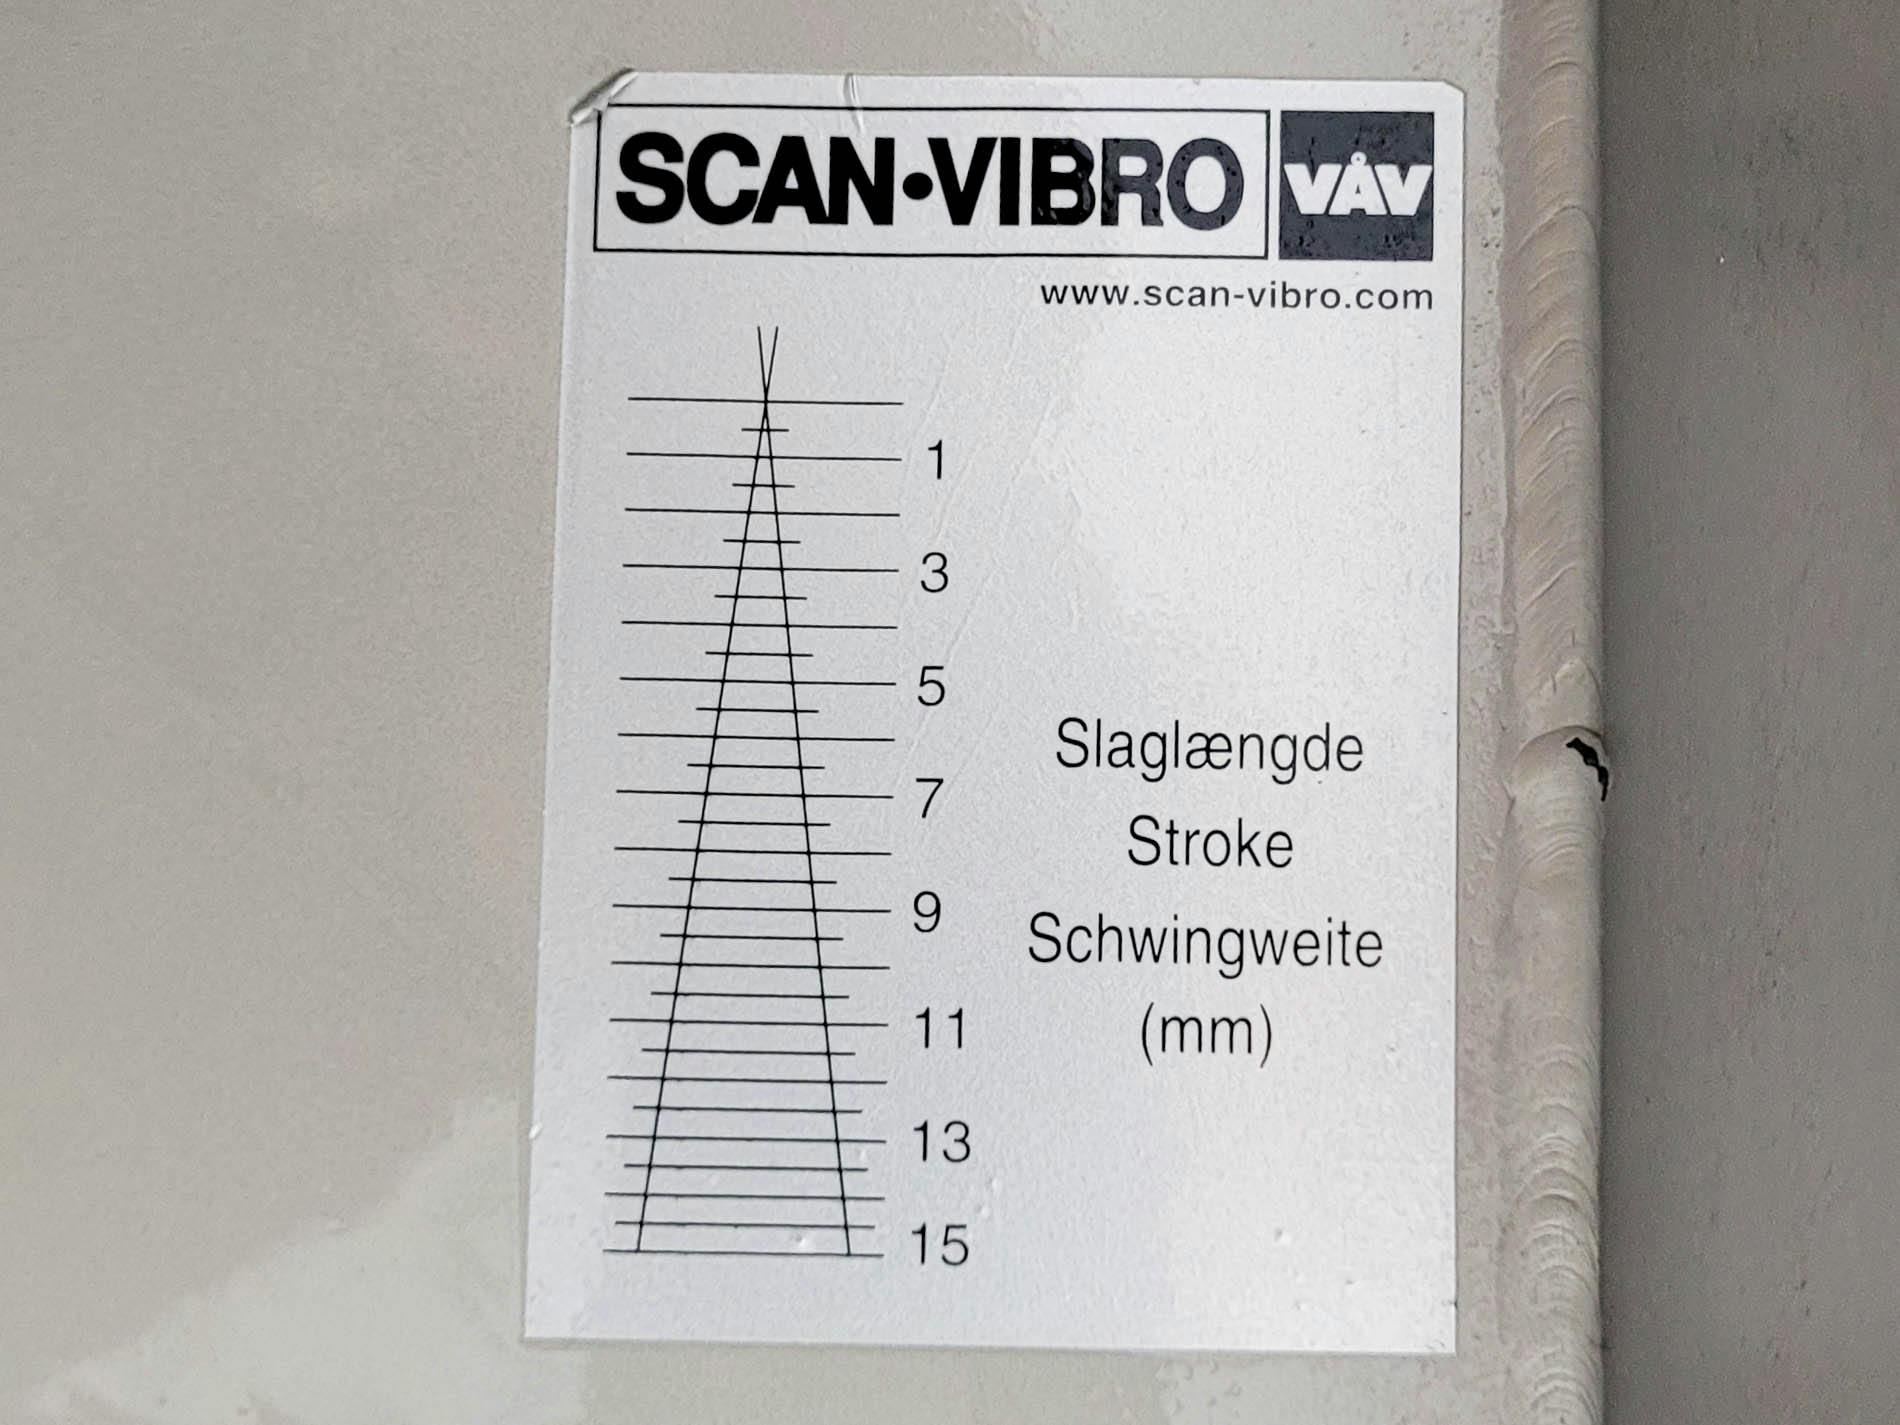 VAV Scan-Vibro TRS 300 x 1019 - Alimentador vibrantes - image 15